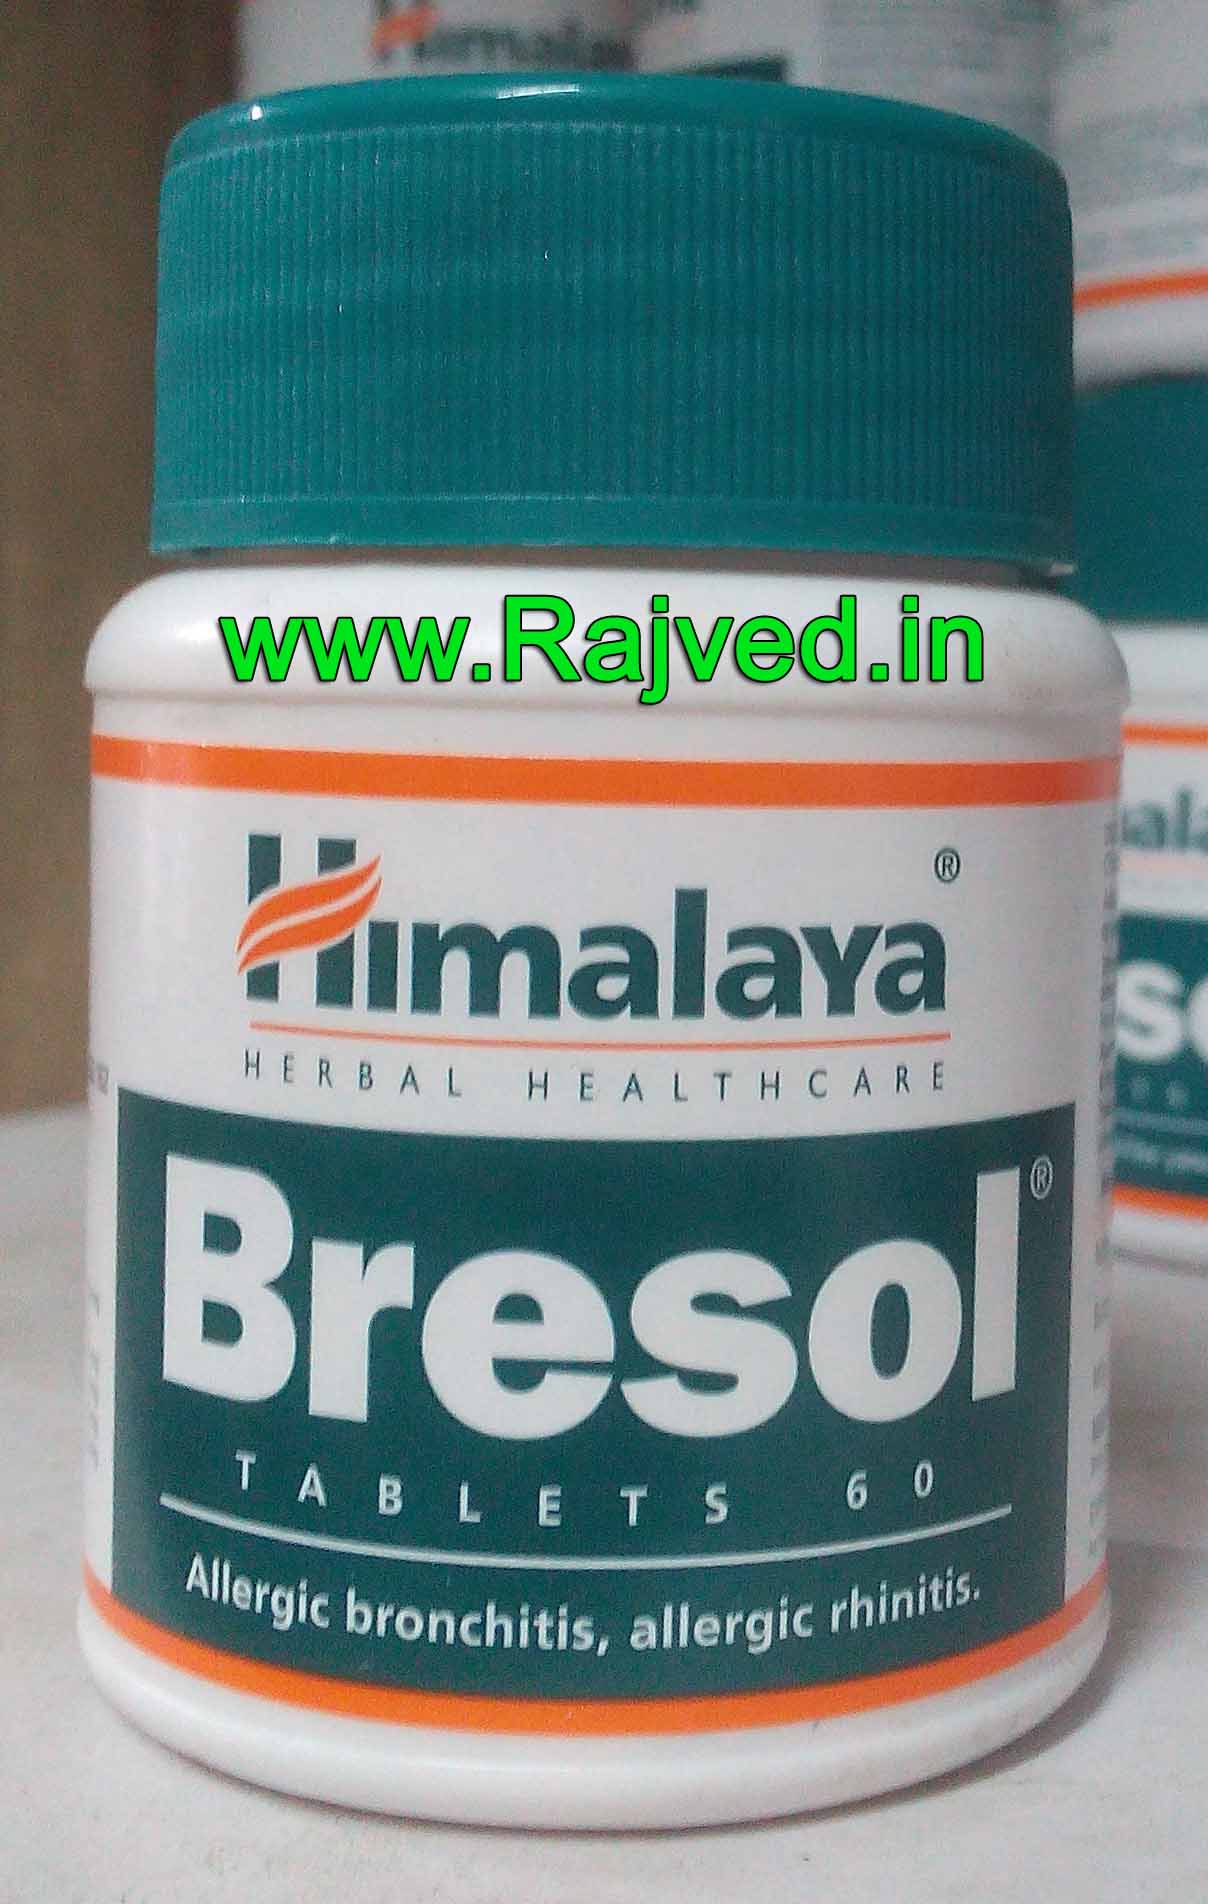 bresol 60tab the himalaya drugs company upto 15% off